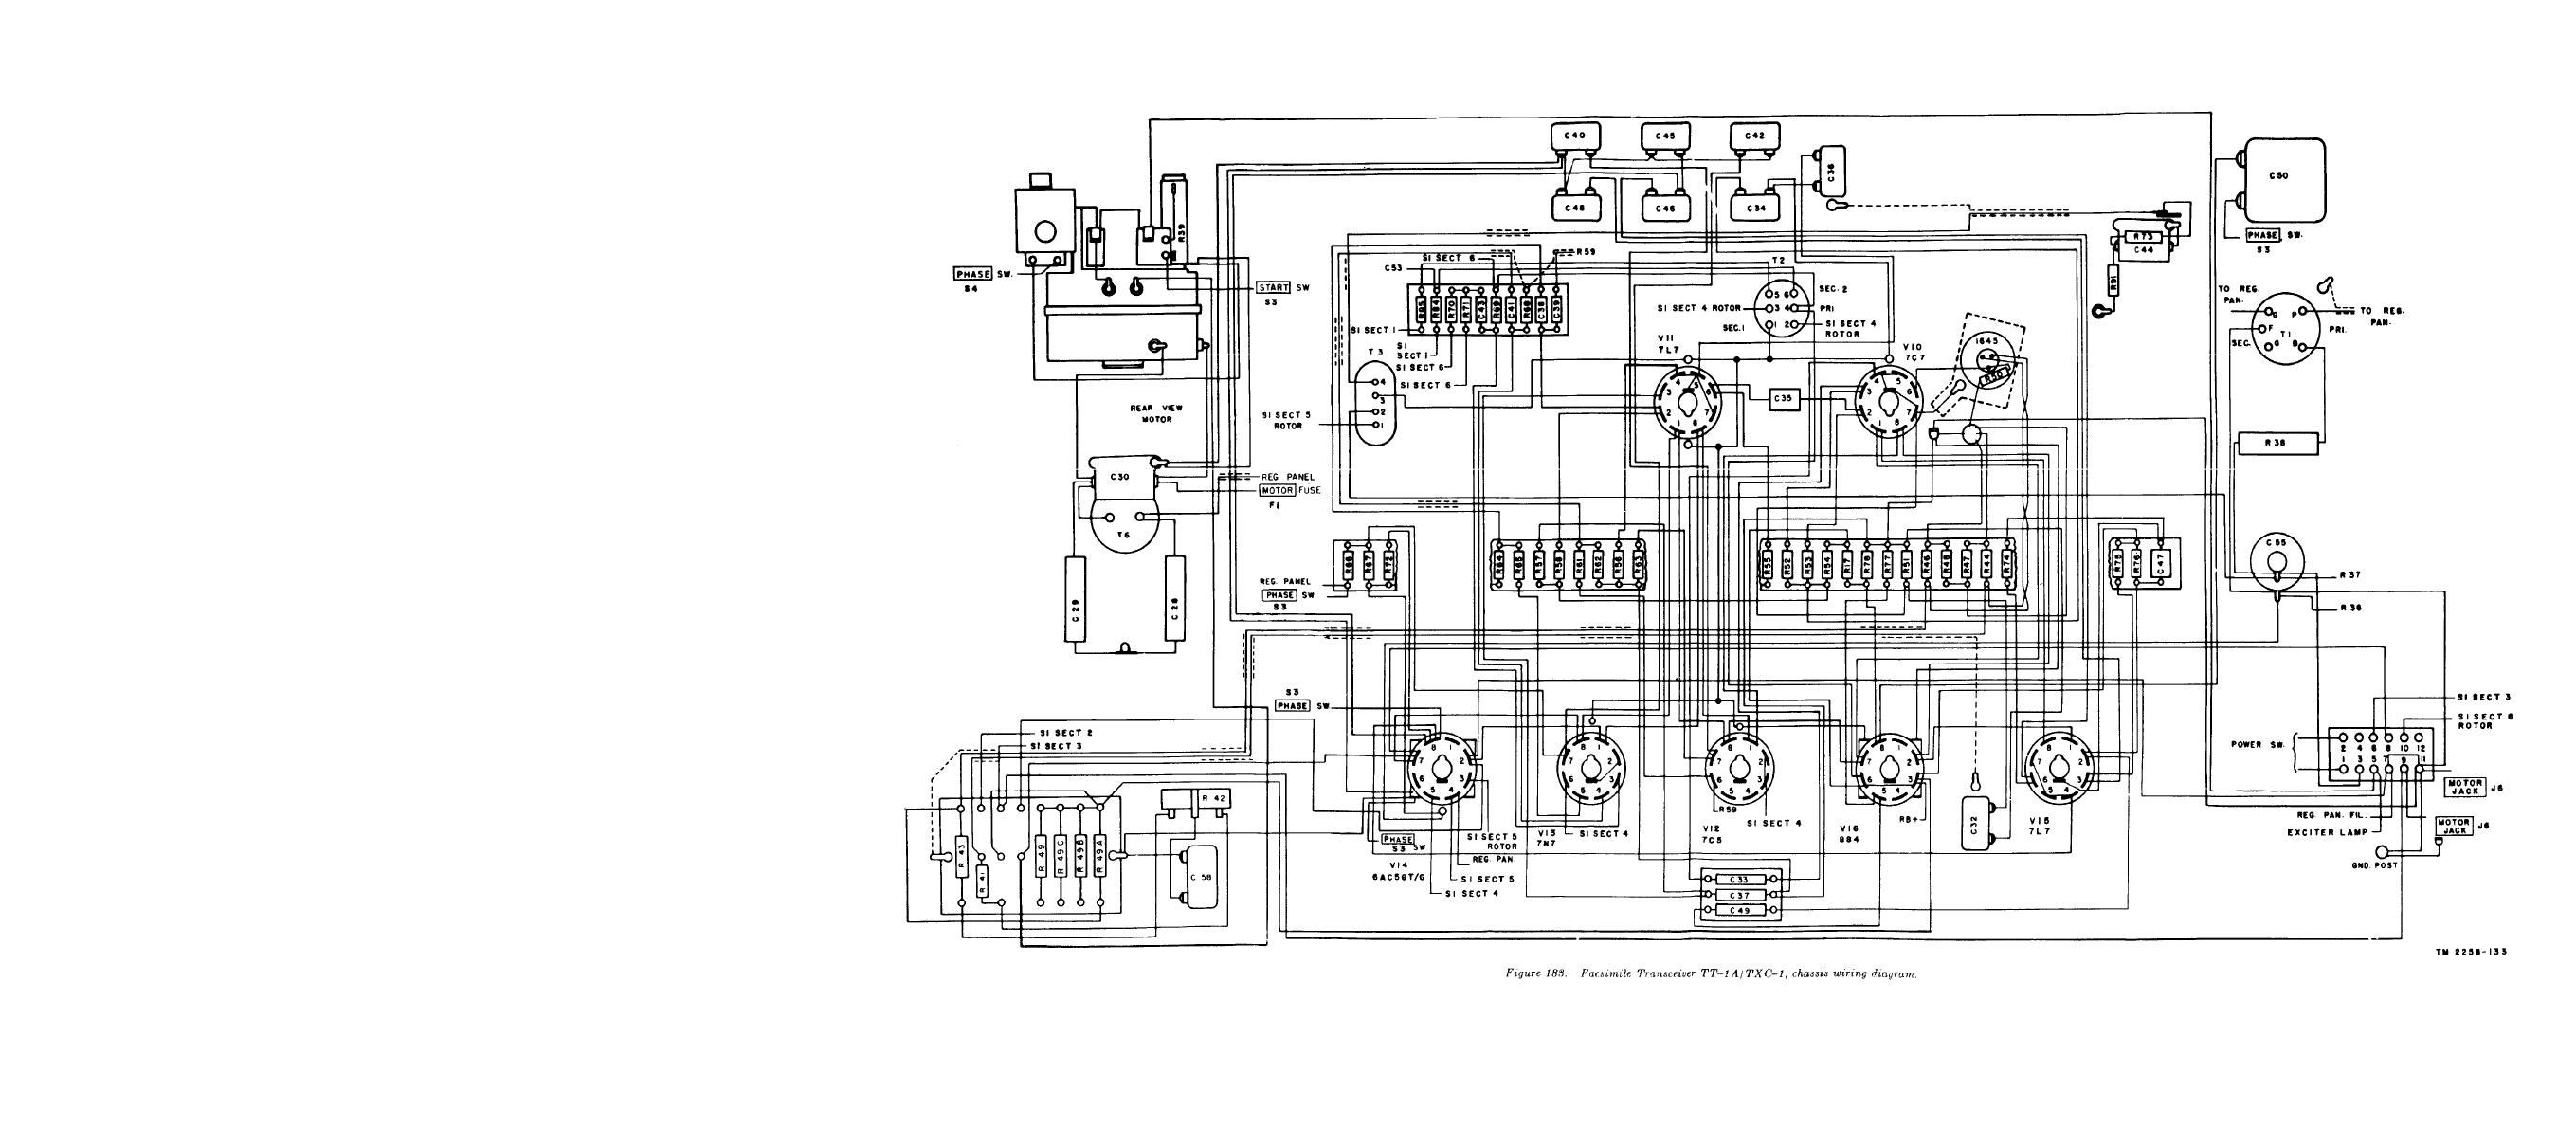 Figure 183. Facsimile Transceiver TT-1A/TXC-1, chassis wiring diagram